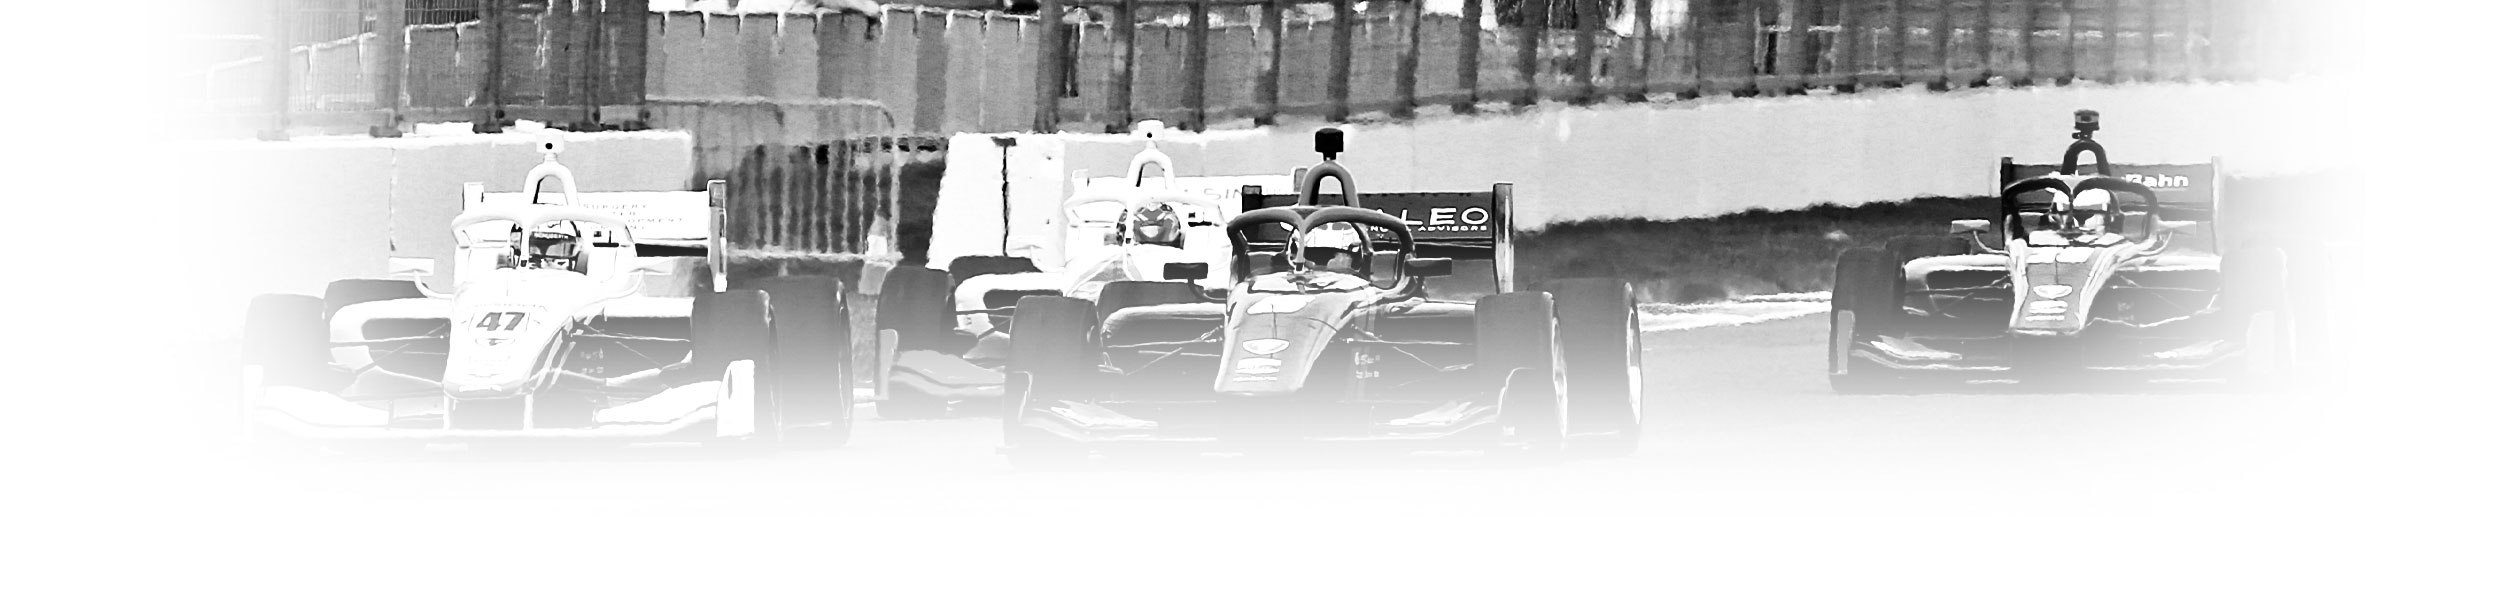 Indianapolis Grand Prix Preview